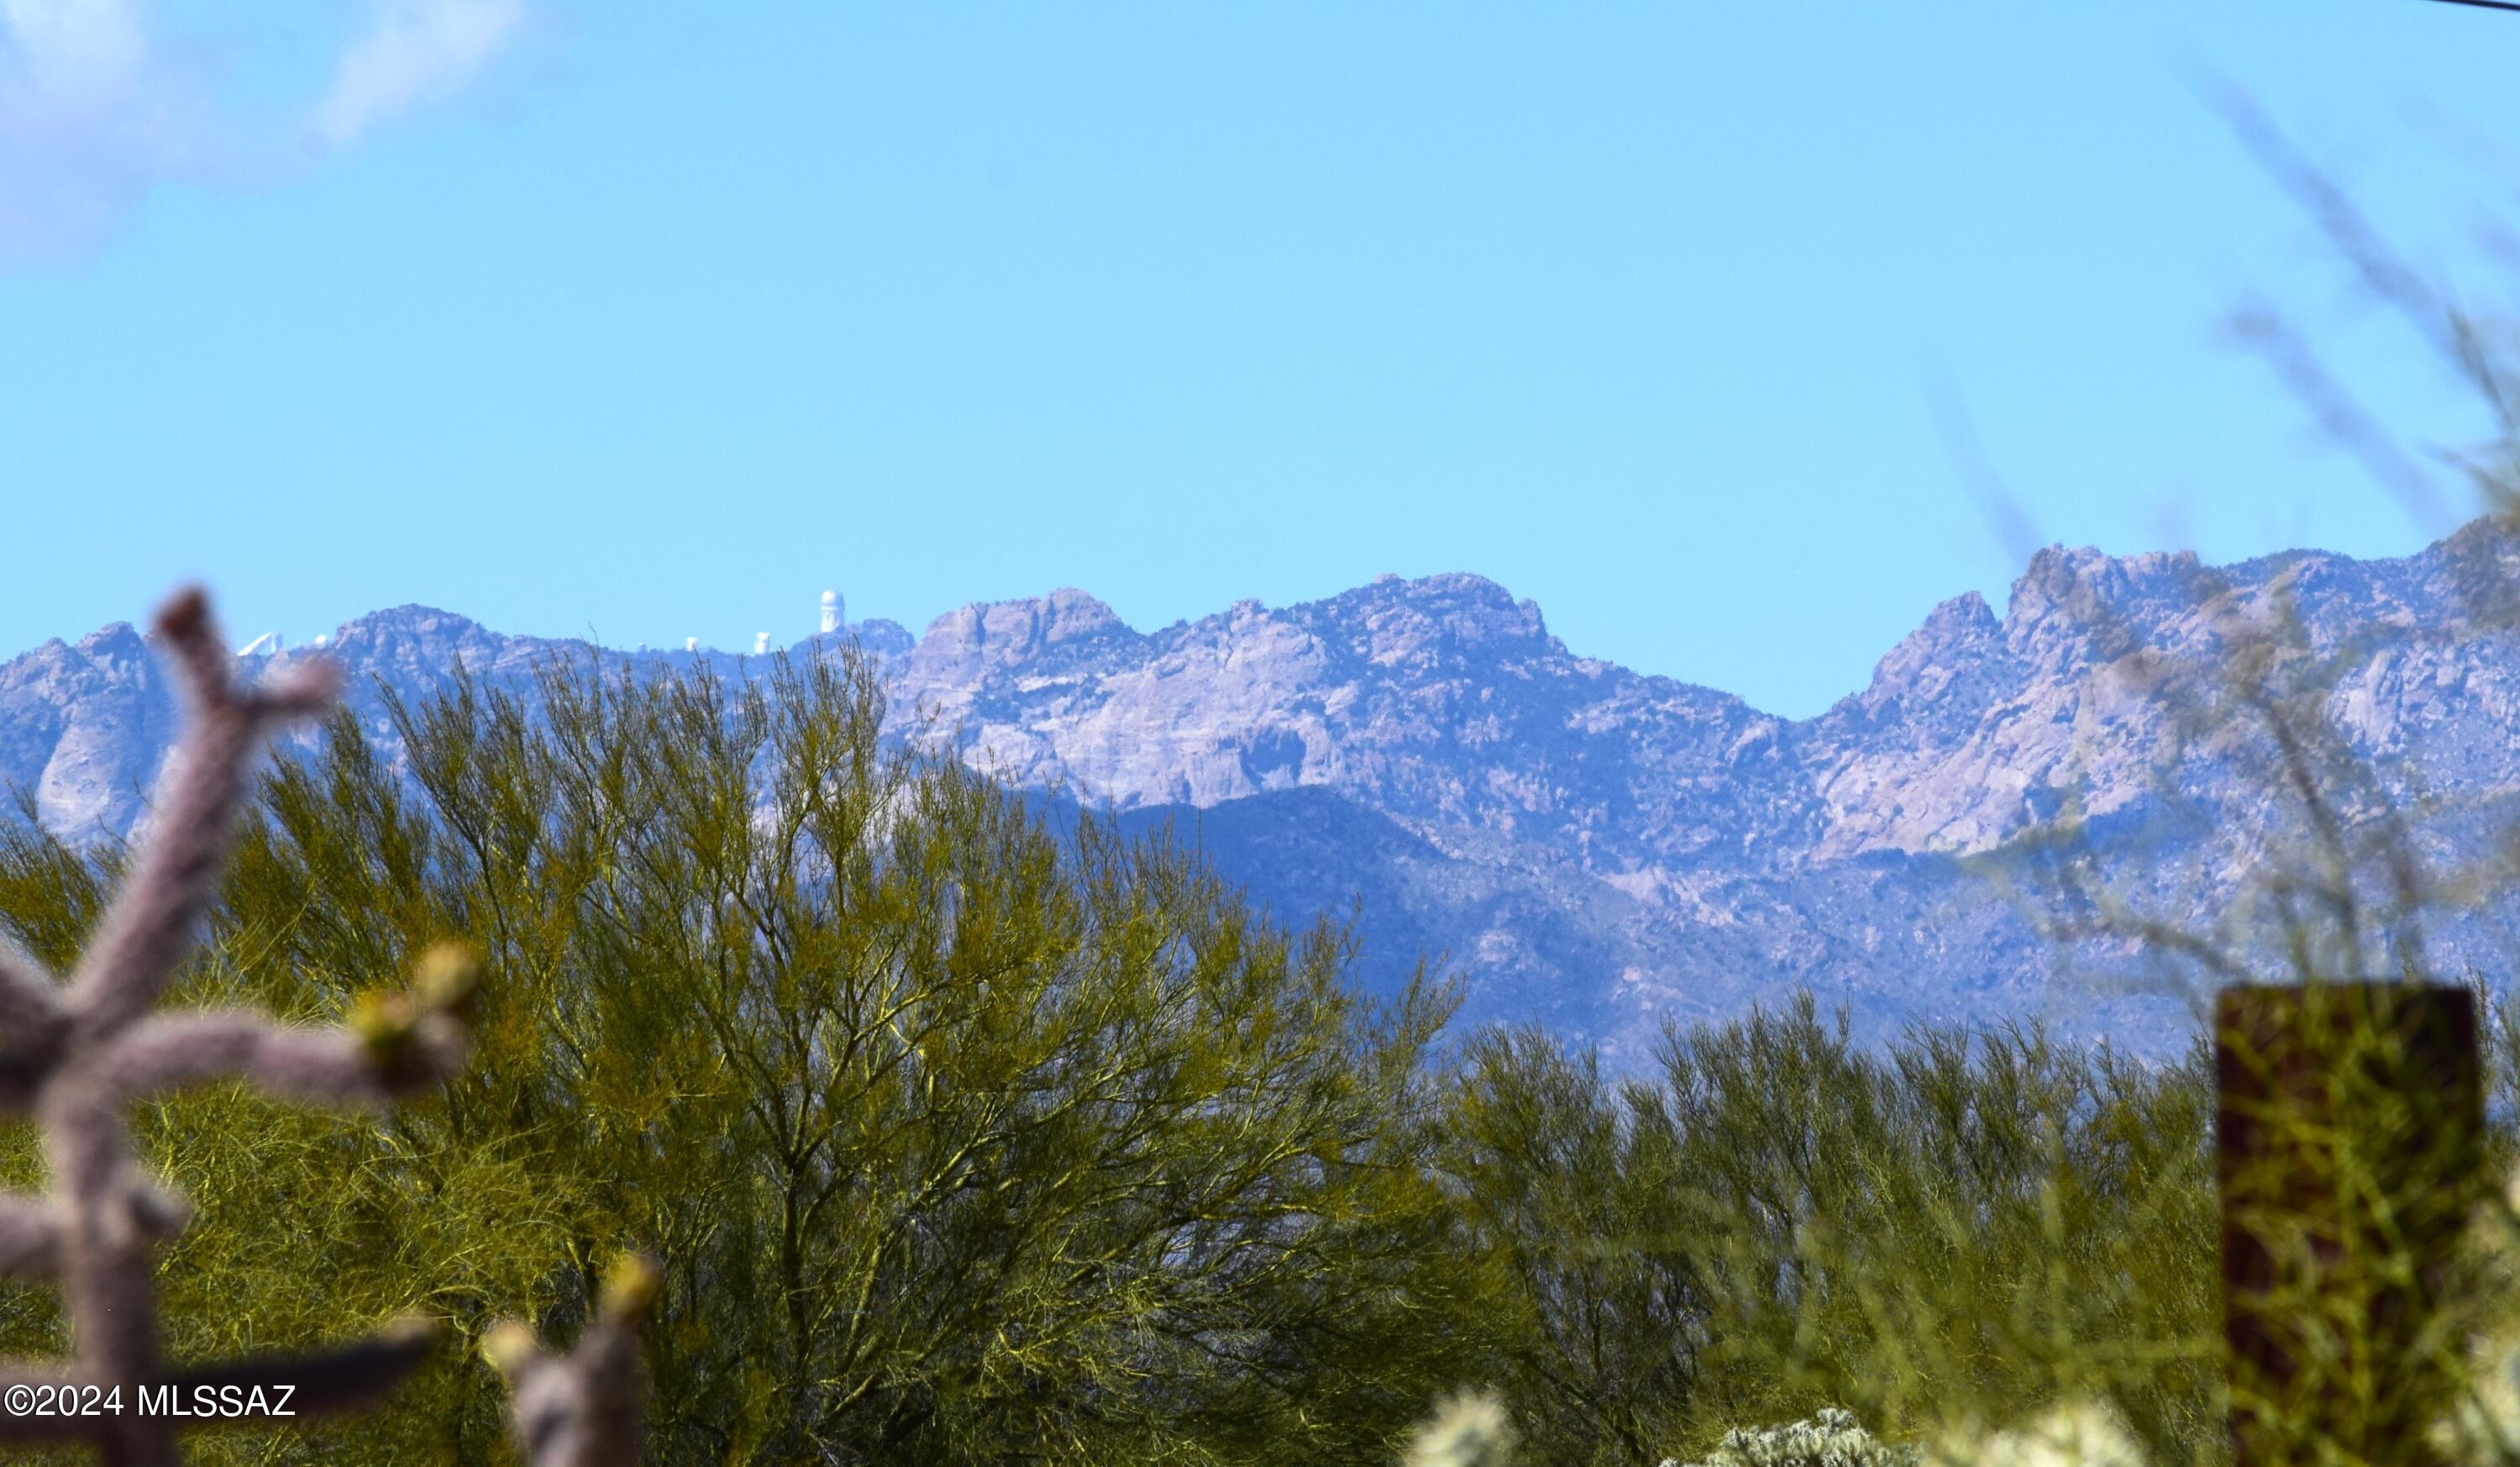 View Tucson, AZ 85735 land